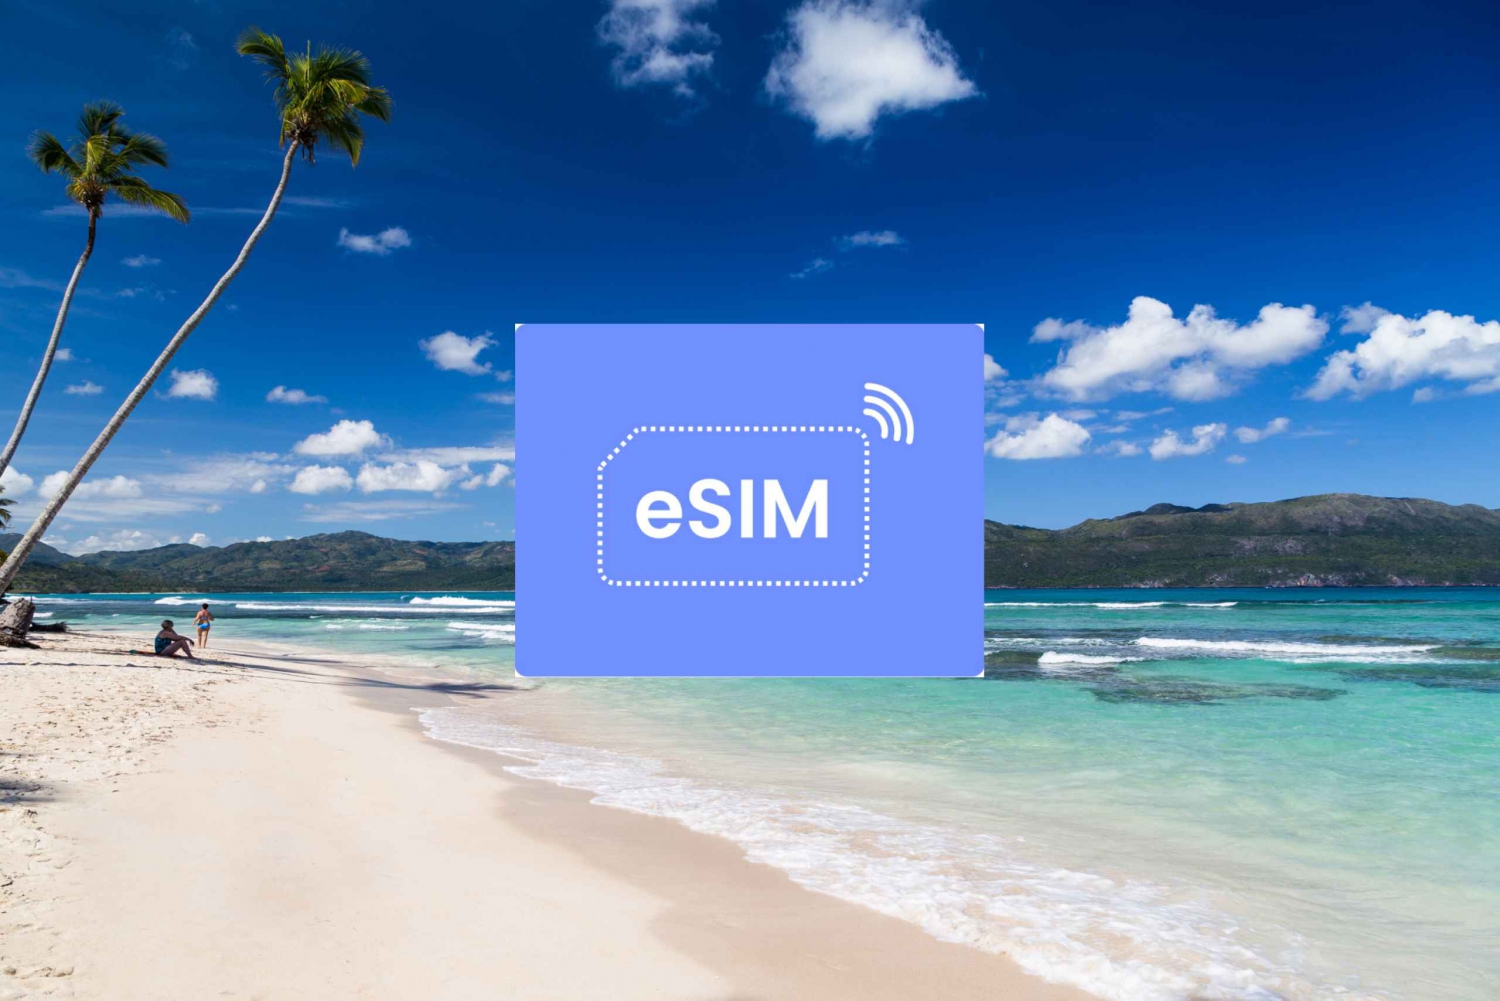 Samaná: Dominican Republic eSIM Roaming Mobile Data Plan